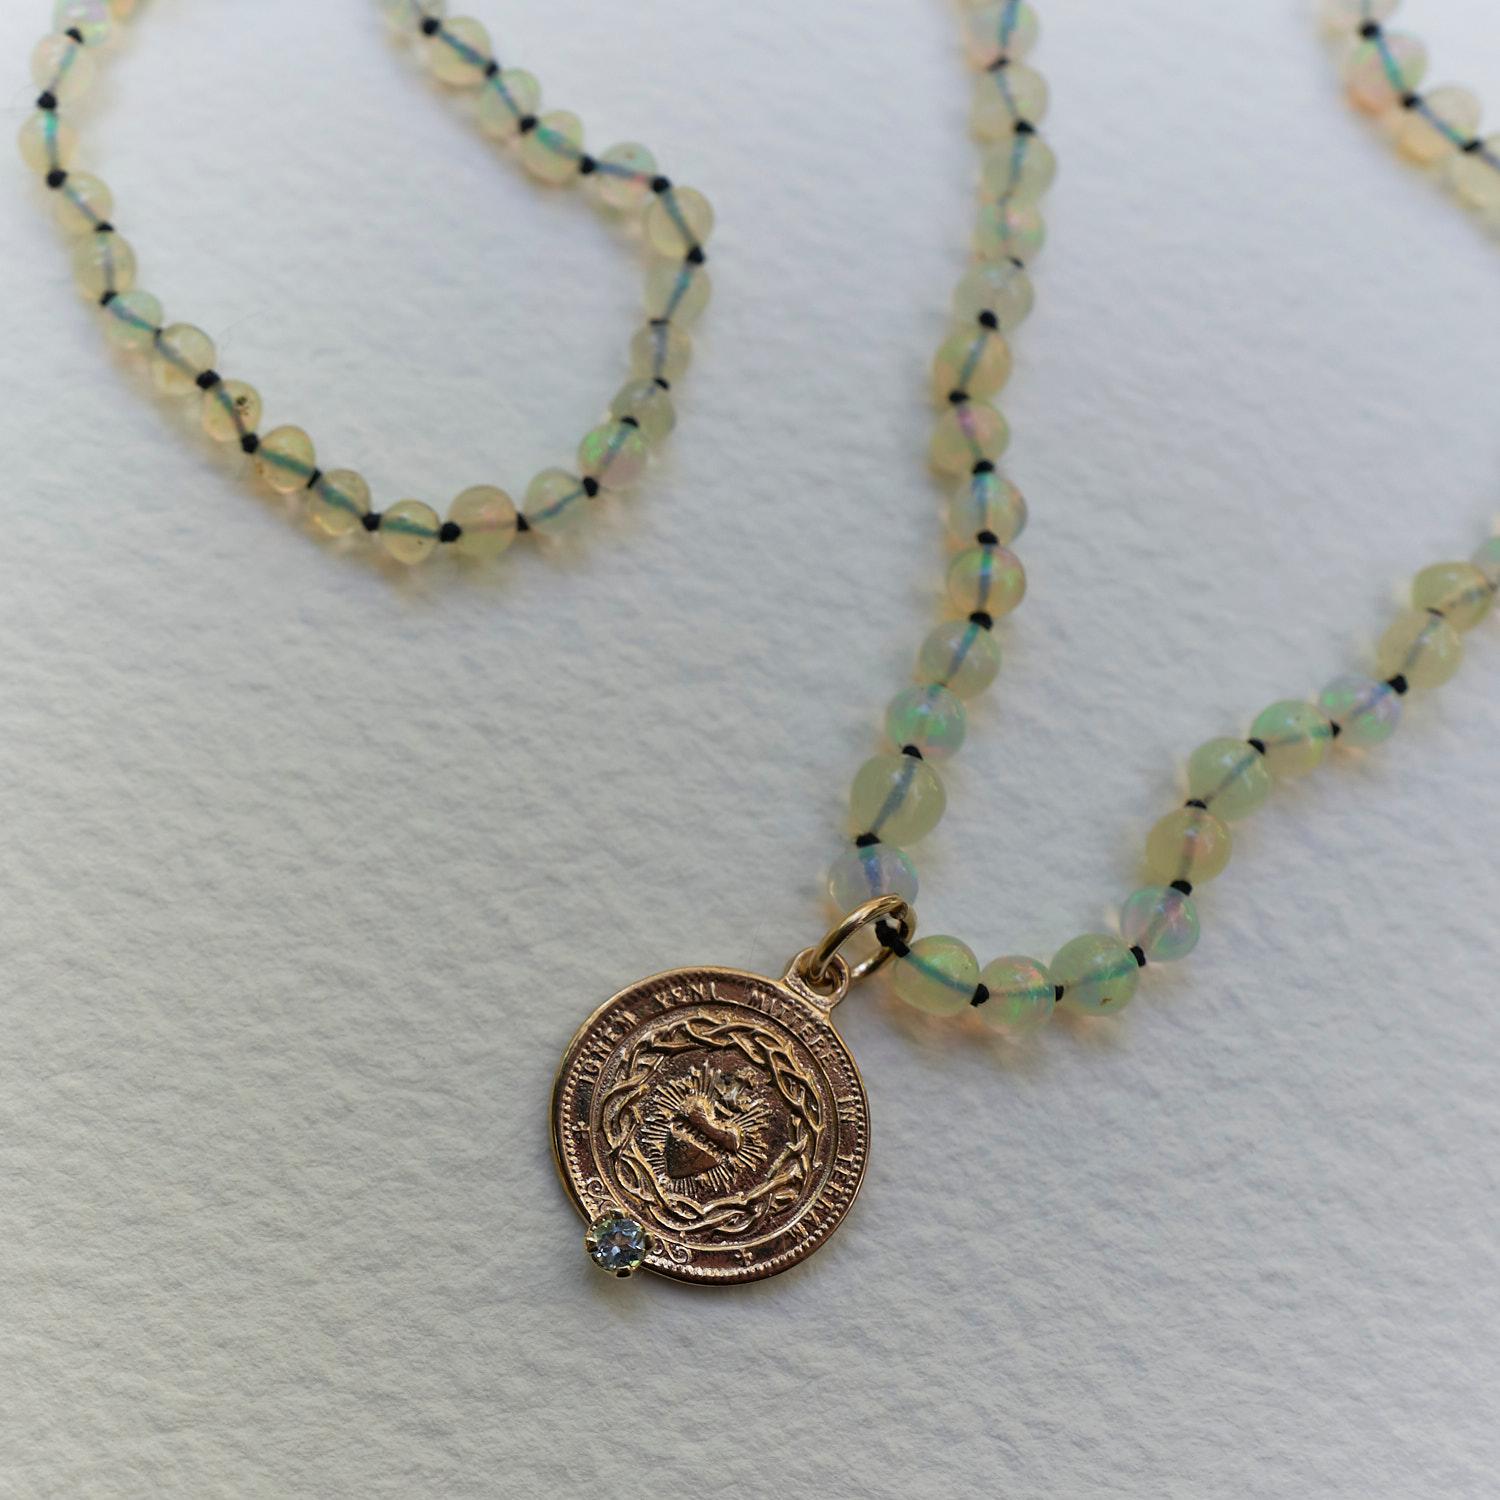 Egyptian Opal Beaded Necklace Medal Aquamarine Choker J Dauphin

18